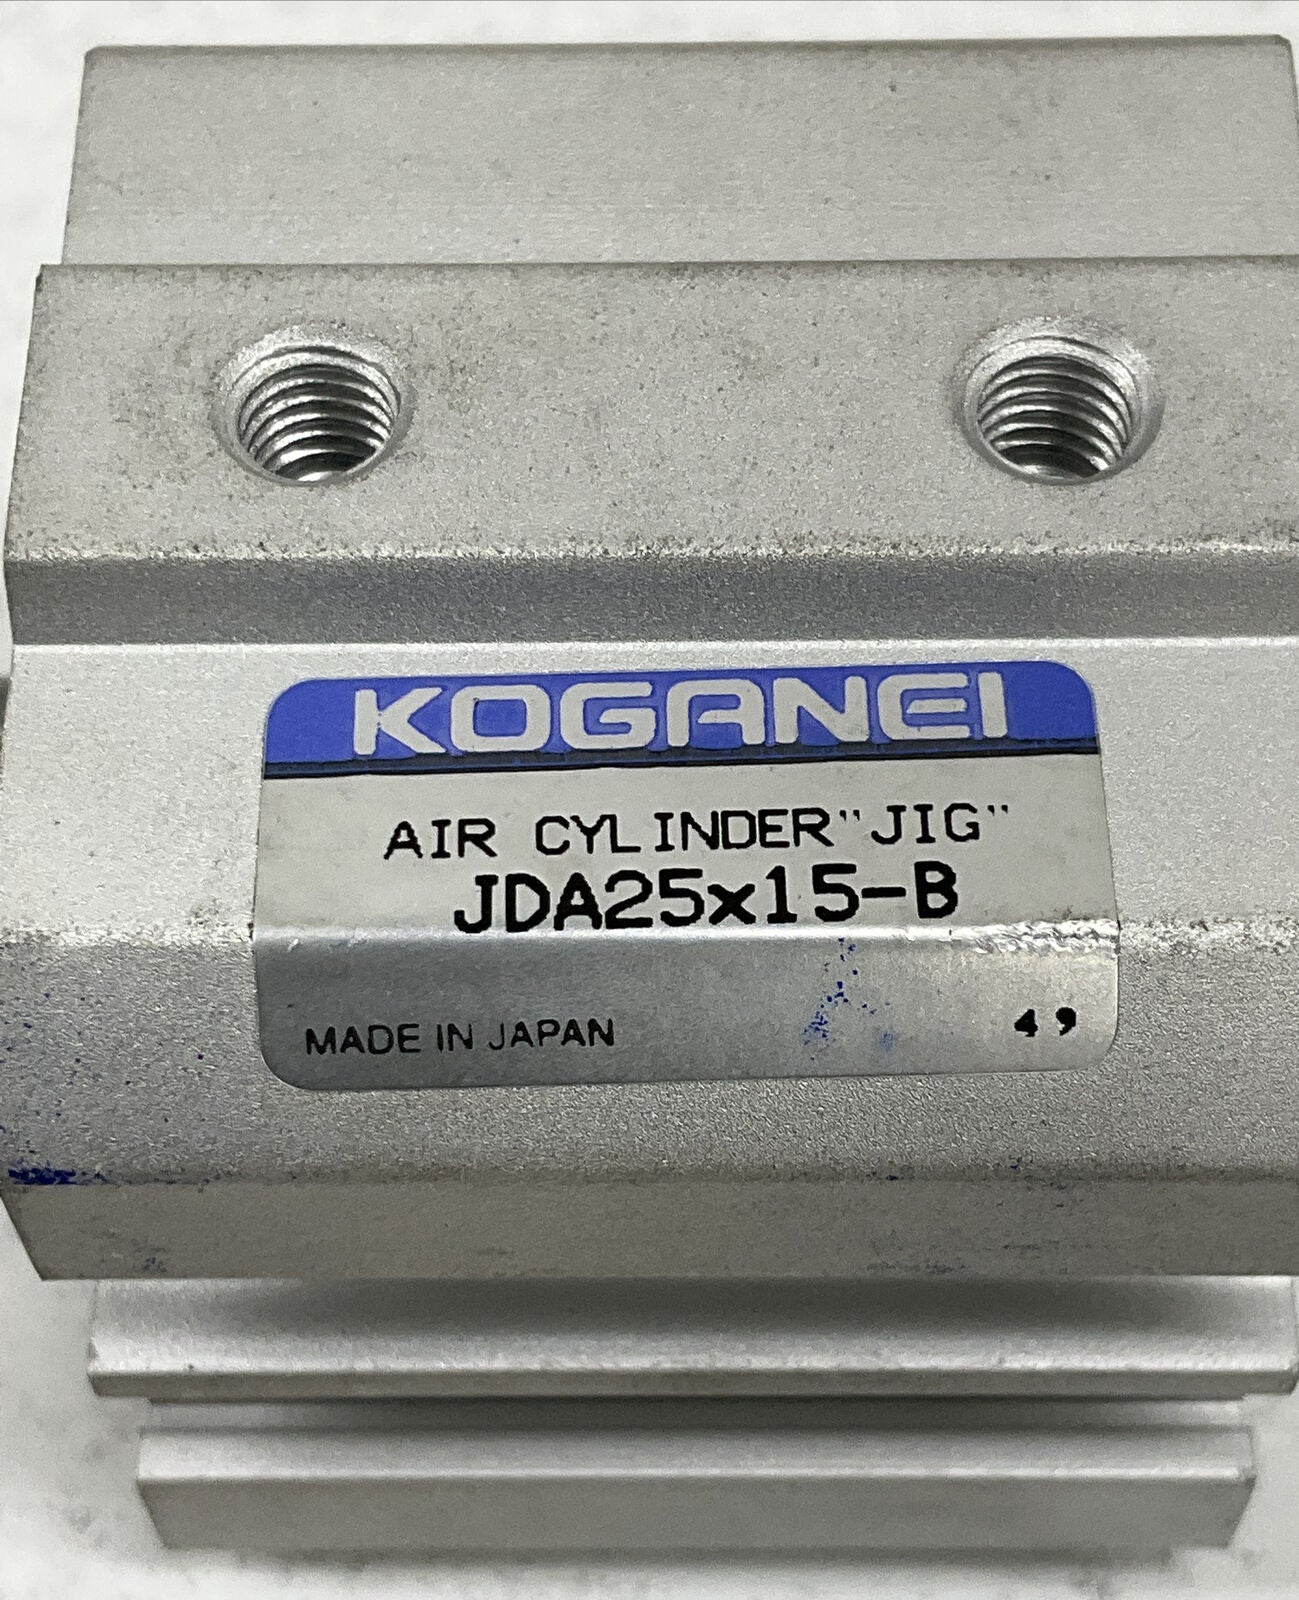 Koganei Air Cylinder "JIG" JDAS25X15-B BL222) - 0